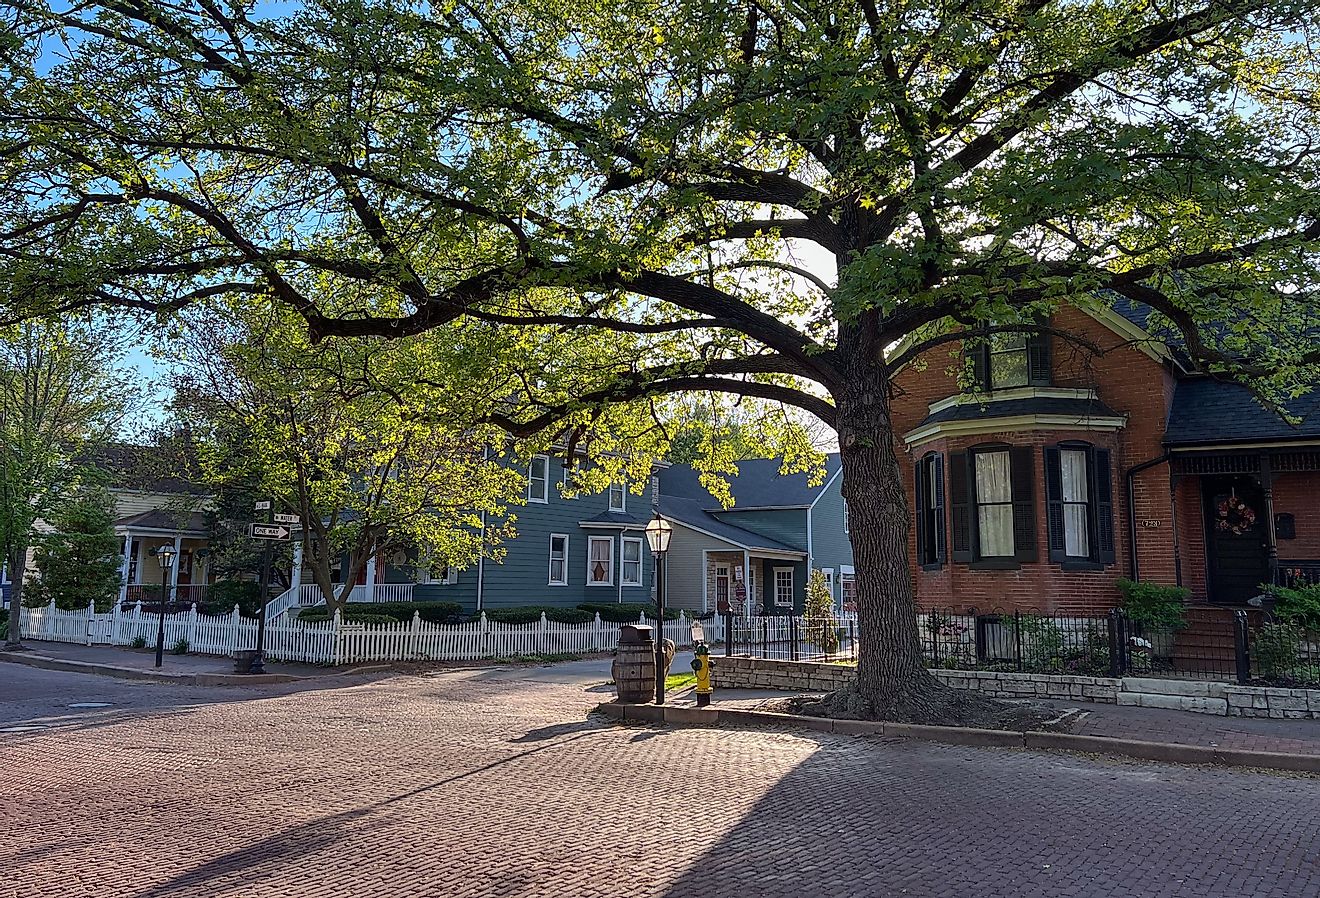 Urban tree canopy in historic Saint Charles, Missouri.